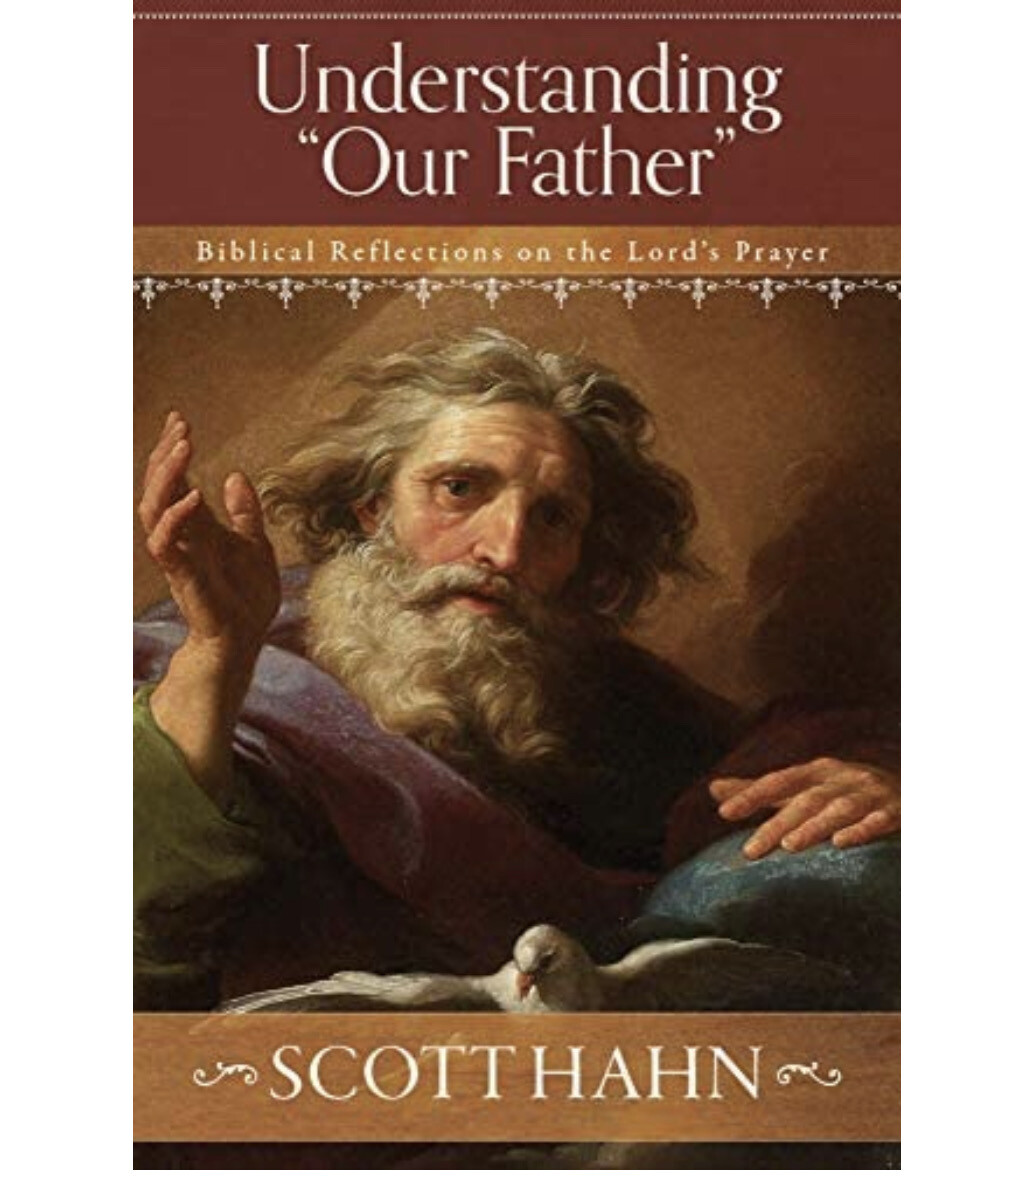 Understanding Our Father by Scott Hahn